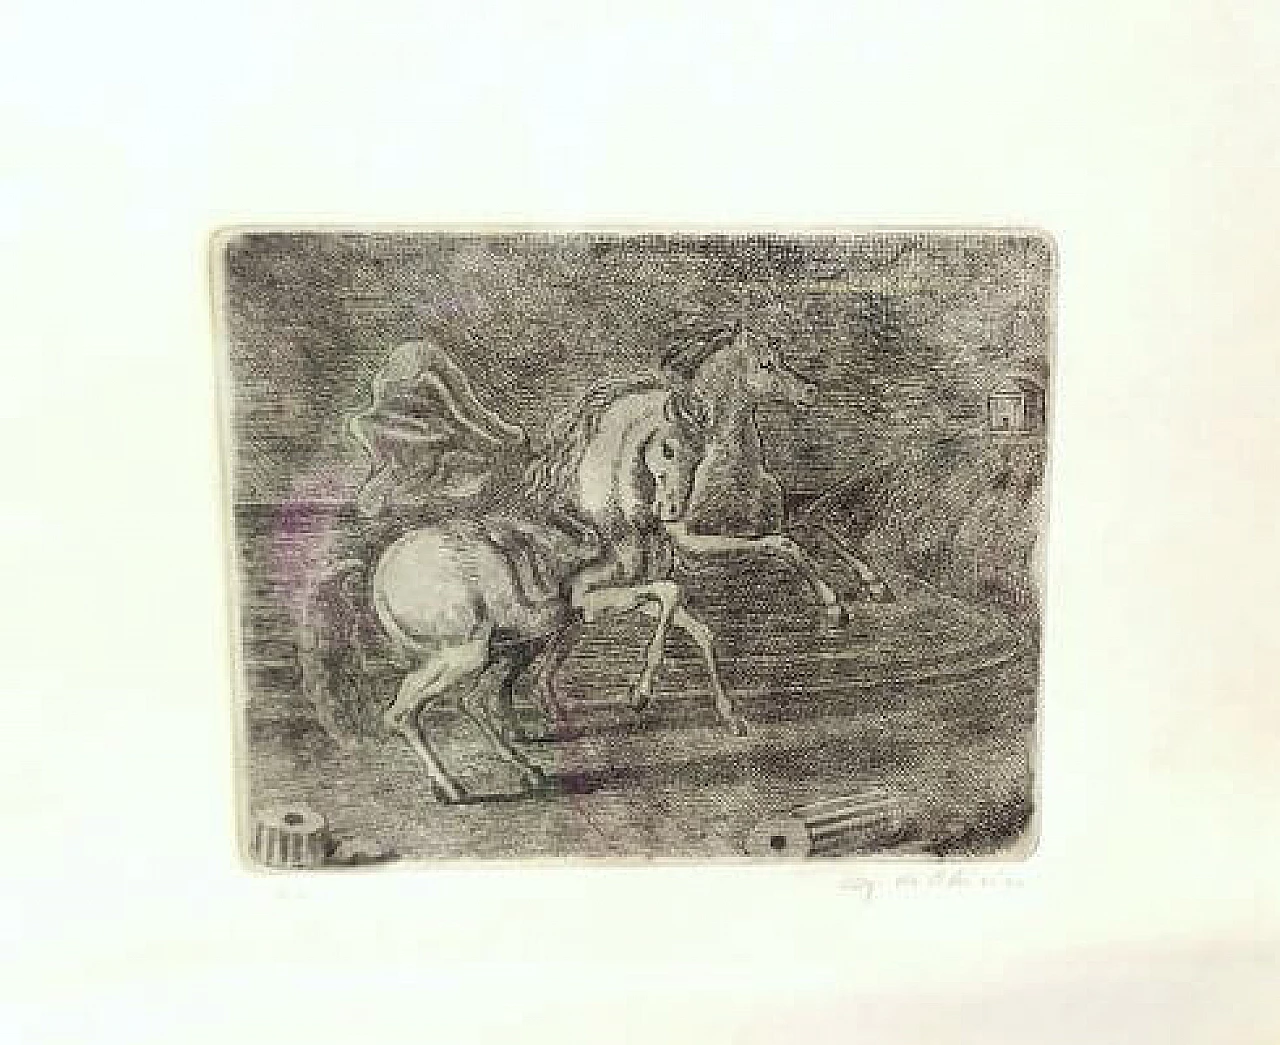 Giorgio de Chirico, Horses, engraving, 1950 1